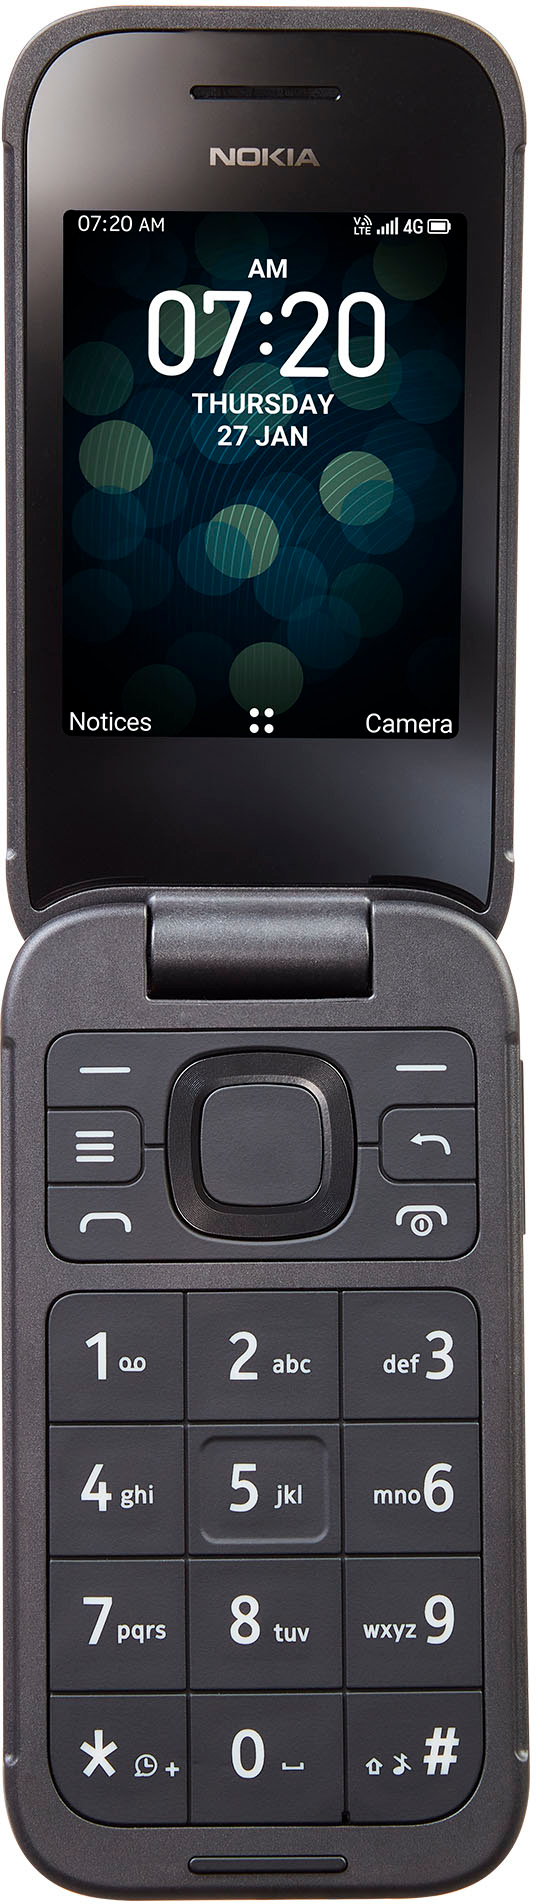 Flip Phone Unlocked | Prepaid Phone 4G LTE | $11 a Month Unlimited